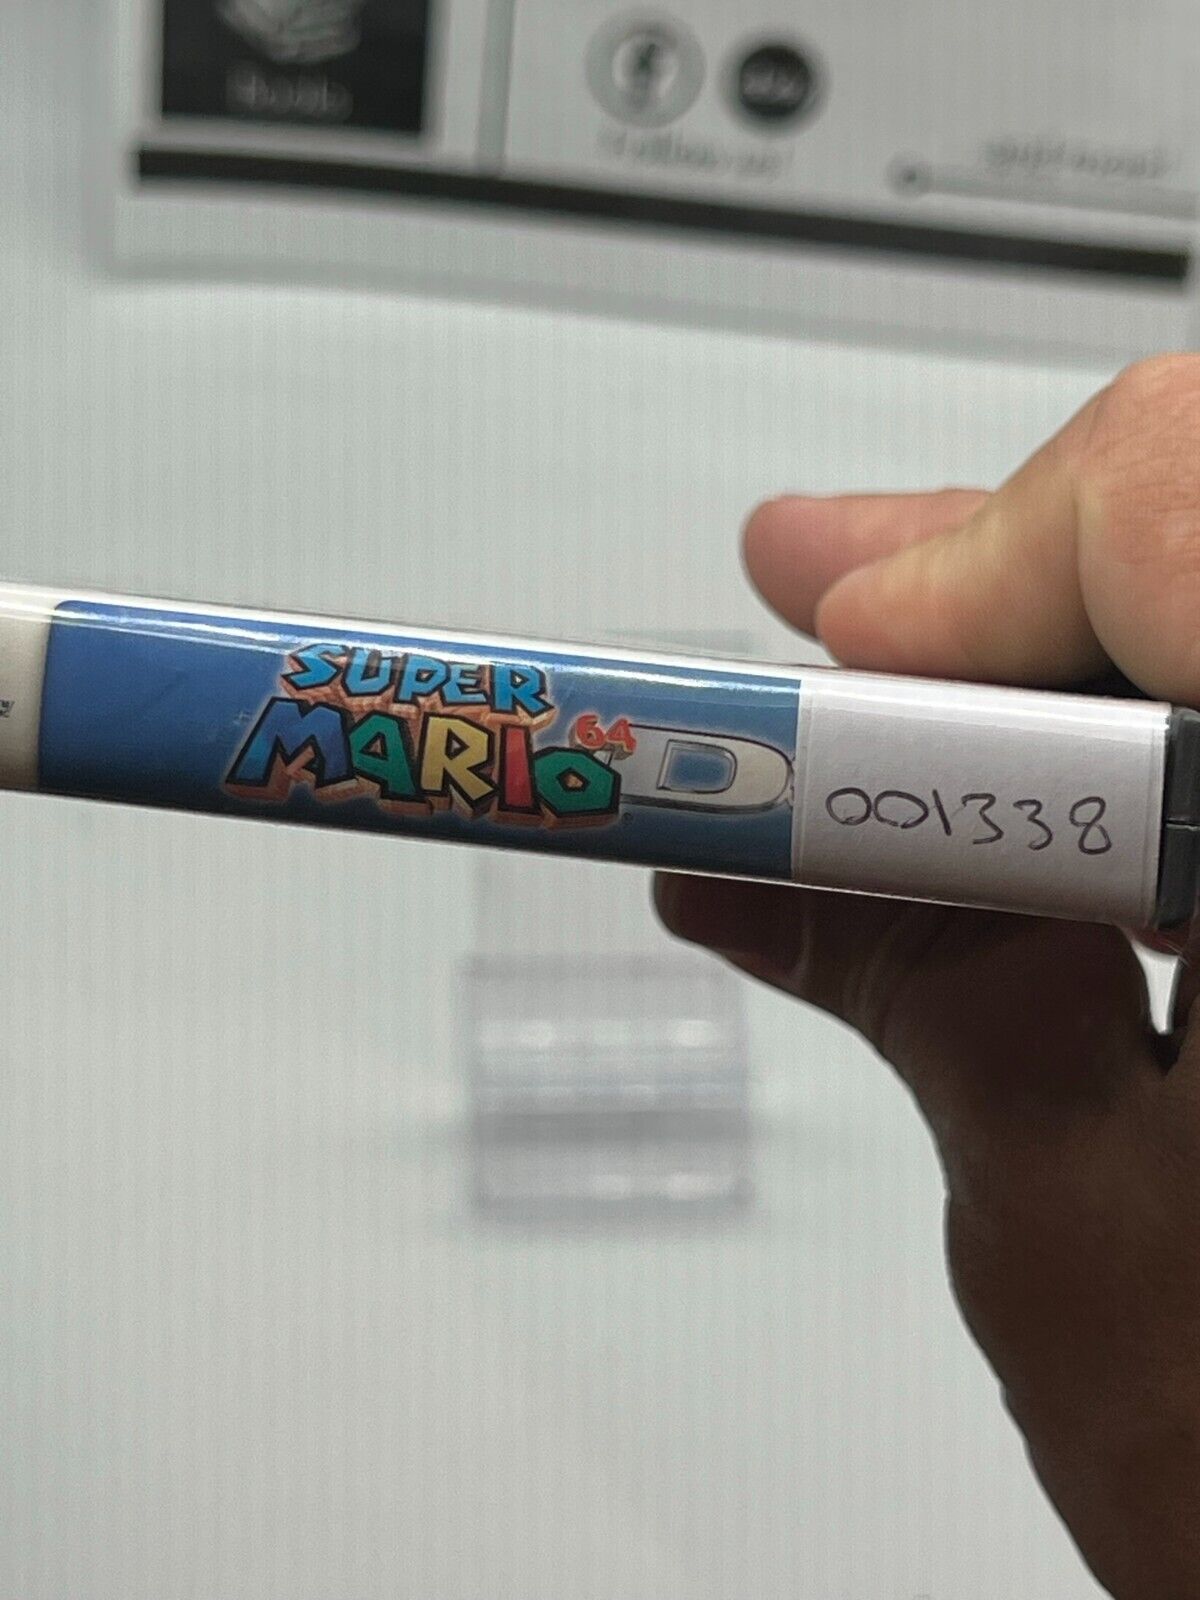 Super Mario 64 DS Nintendo DS - Tested